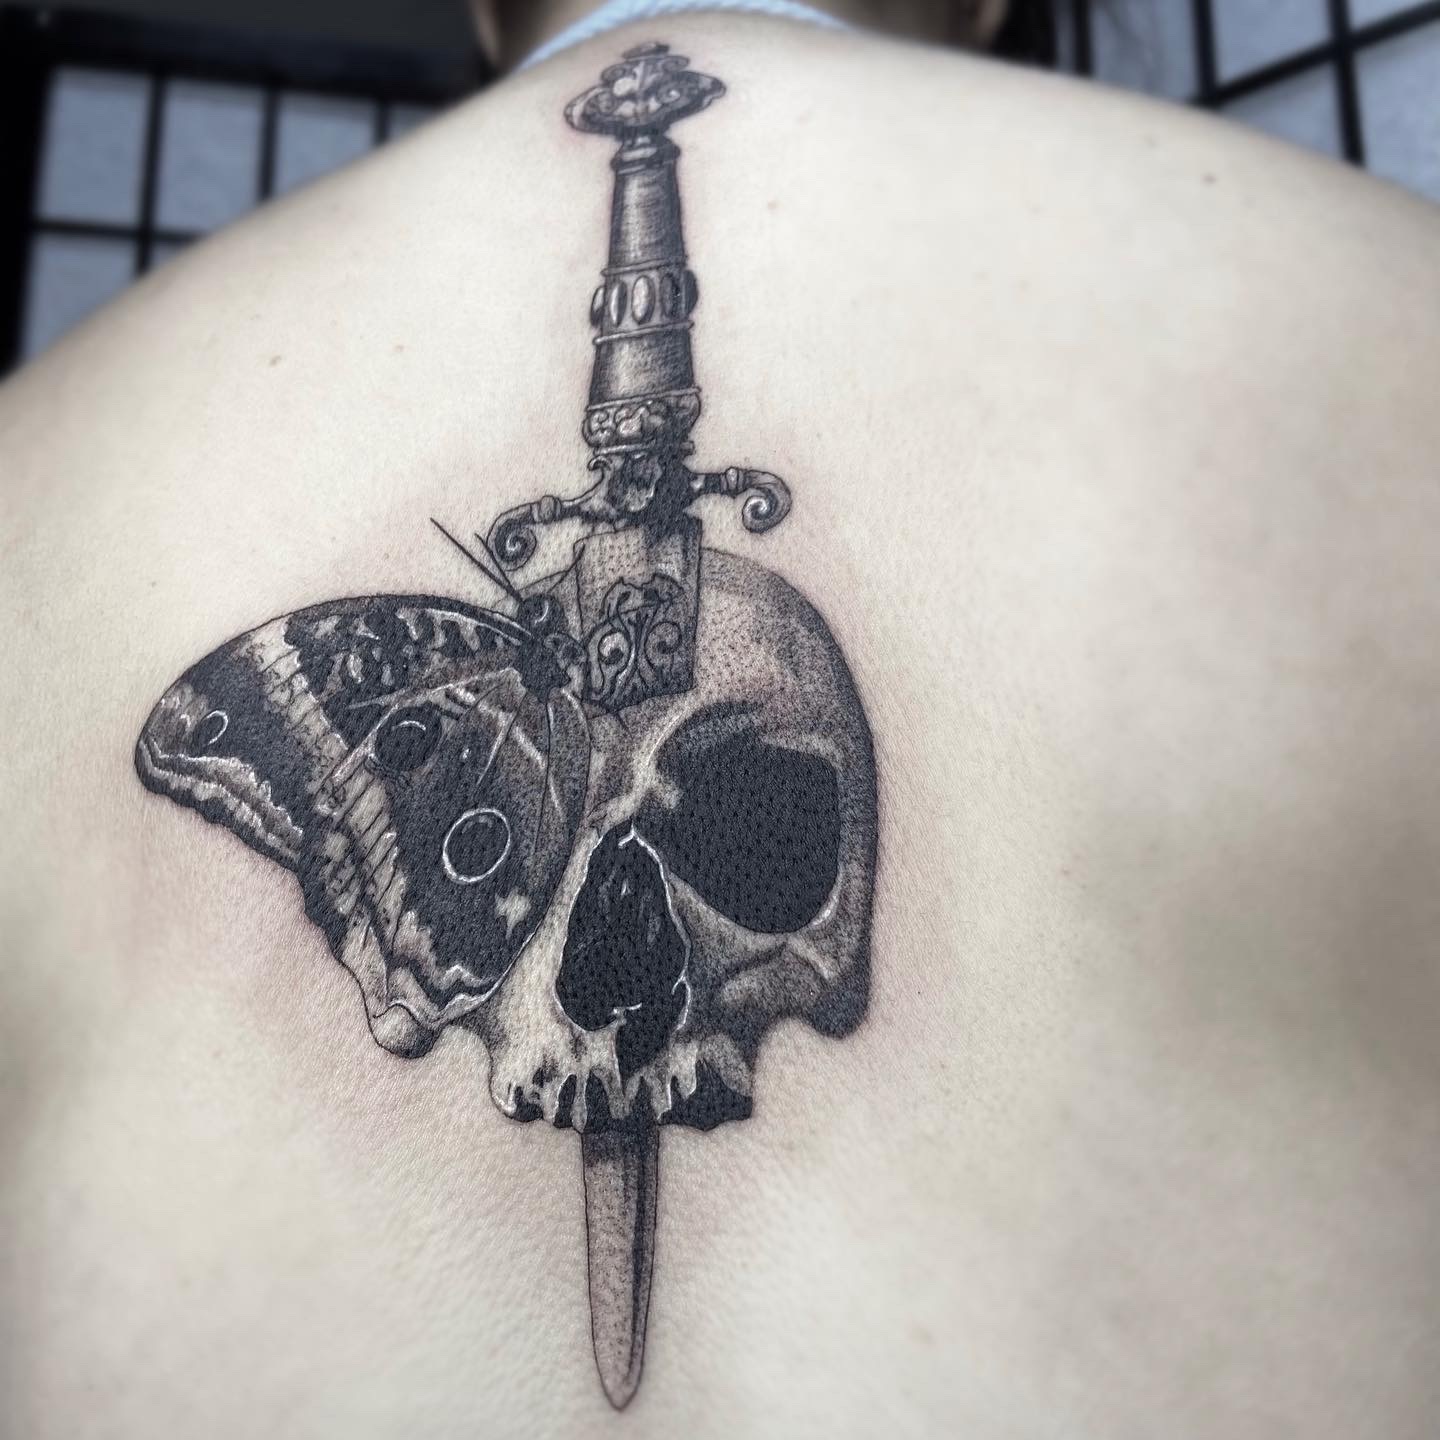 Skeleton/Fine-line/micro-realism tattoo